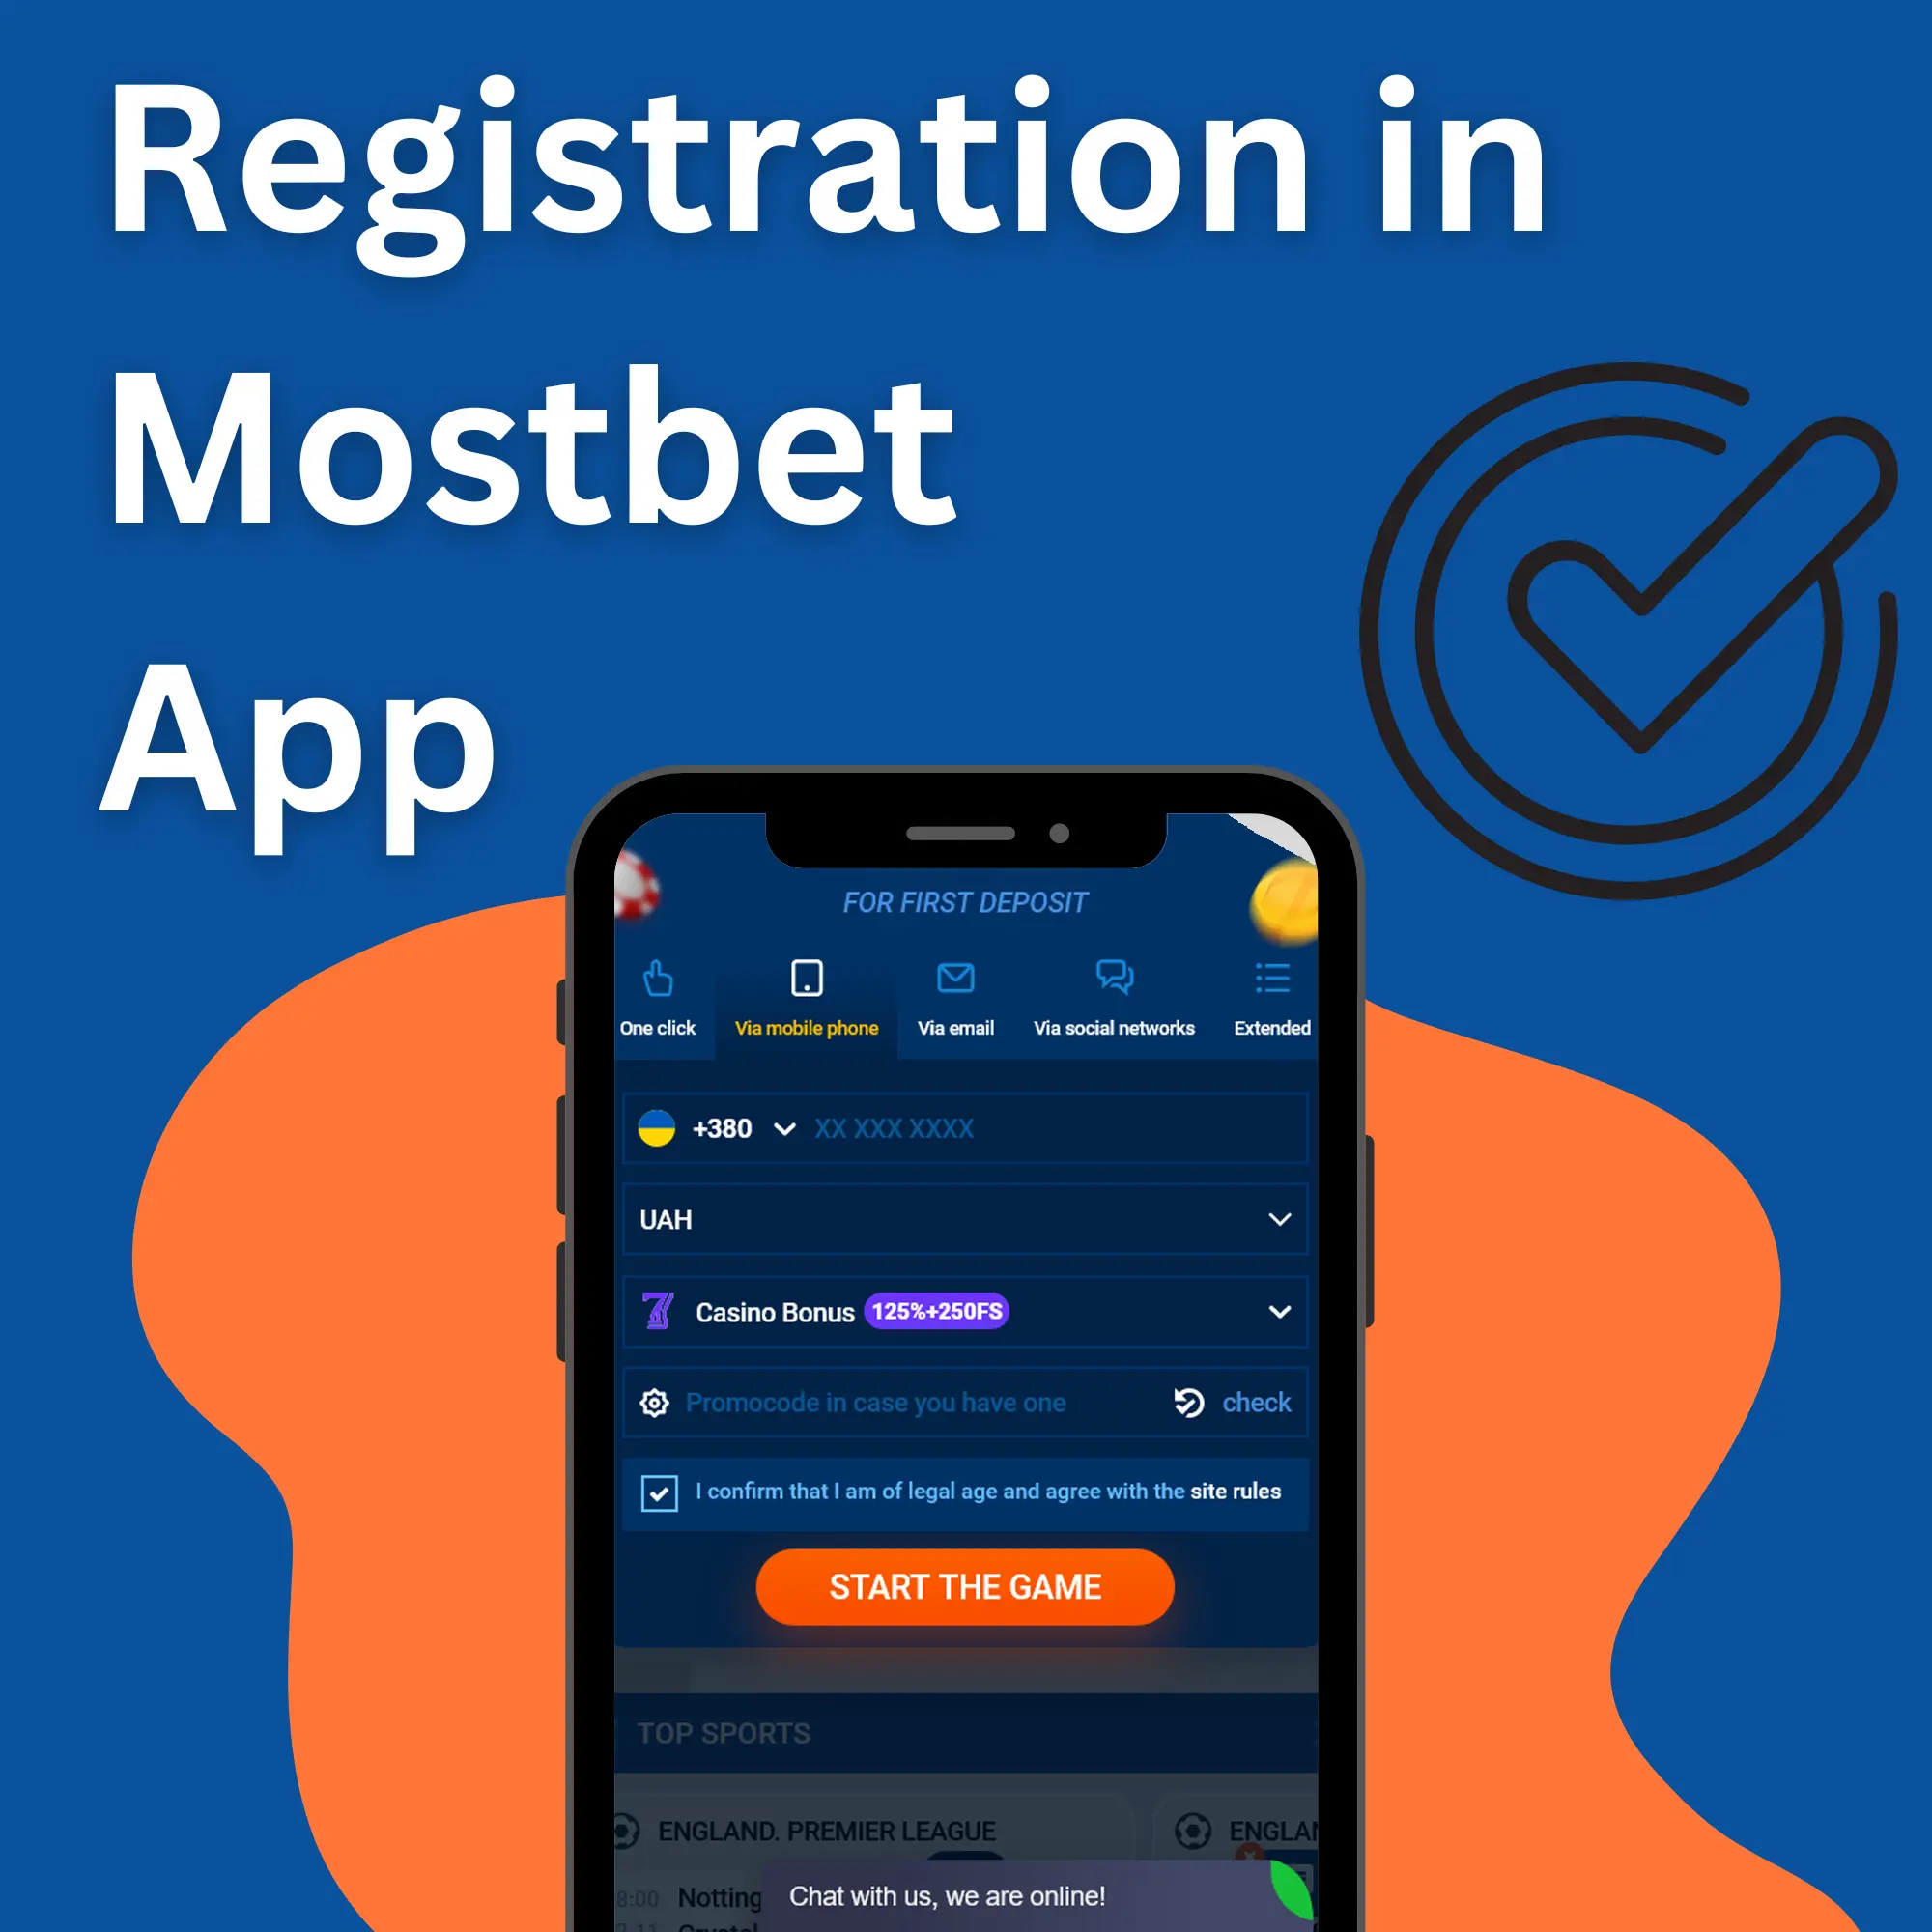 Registration in Mostbet app.